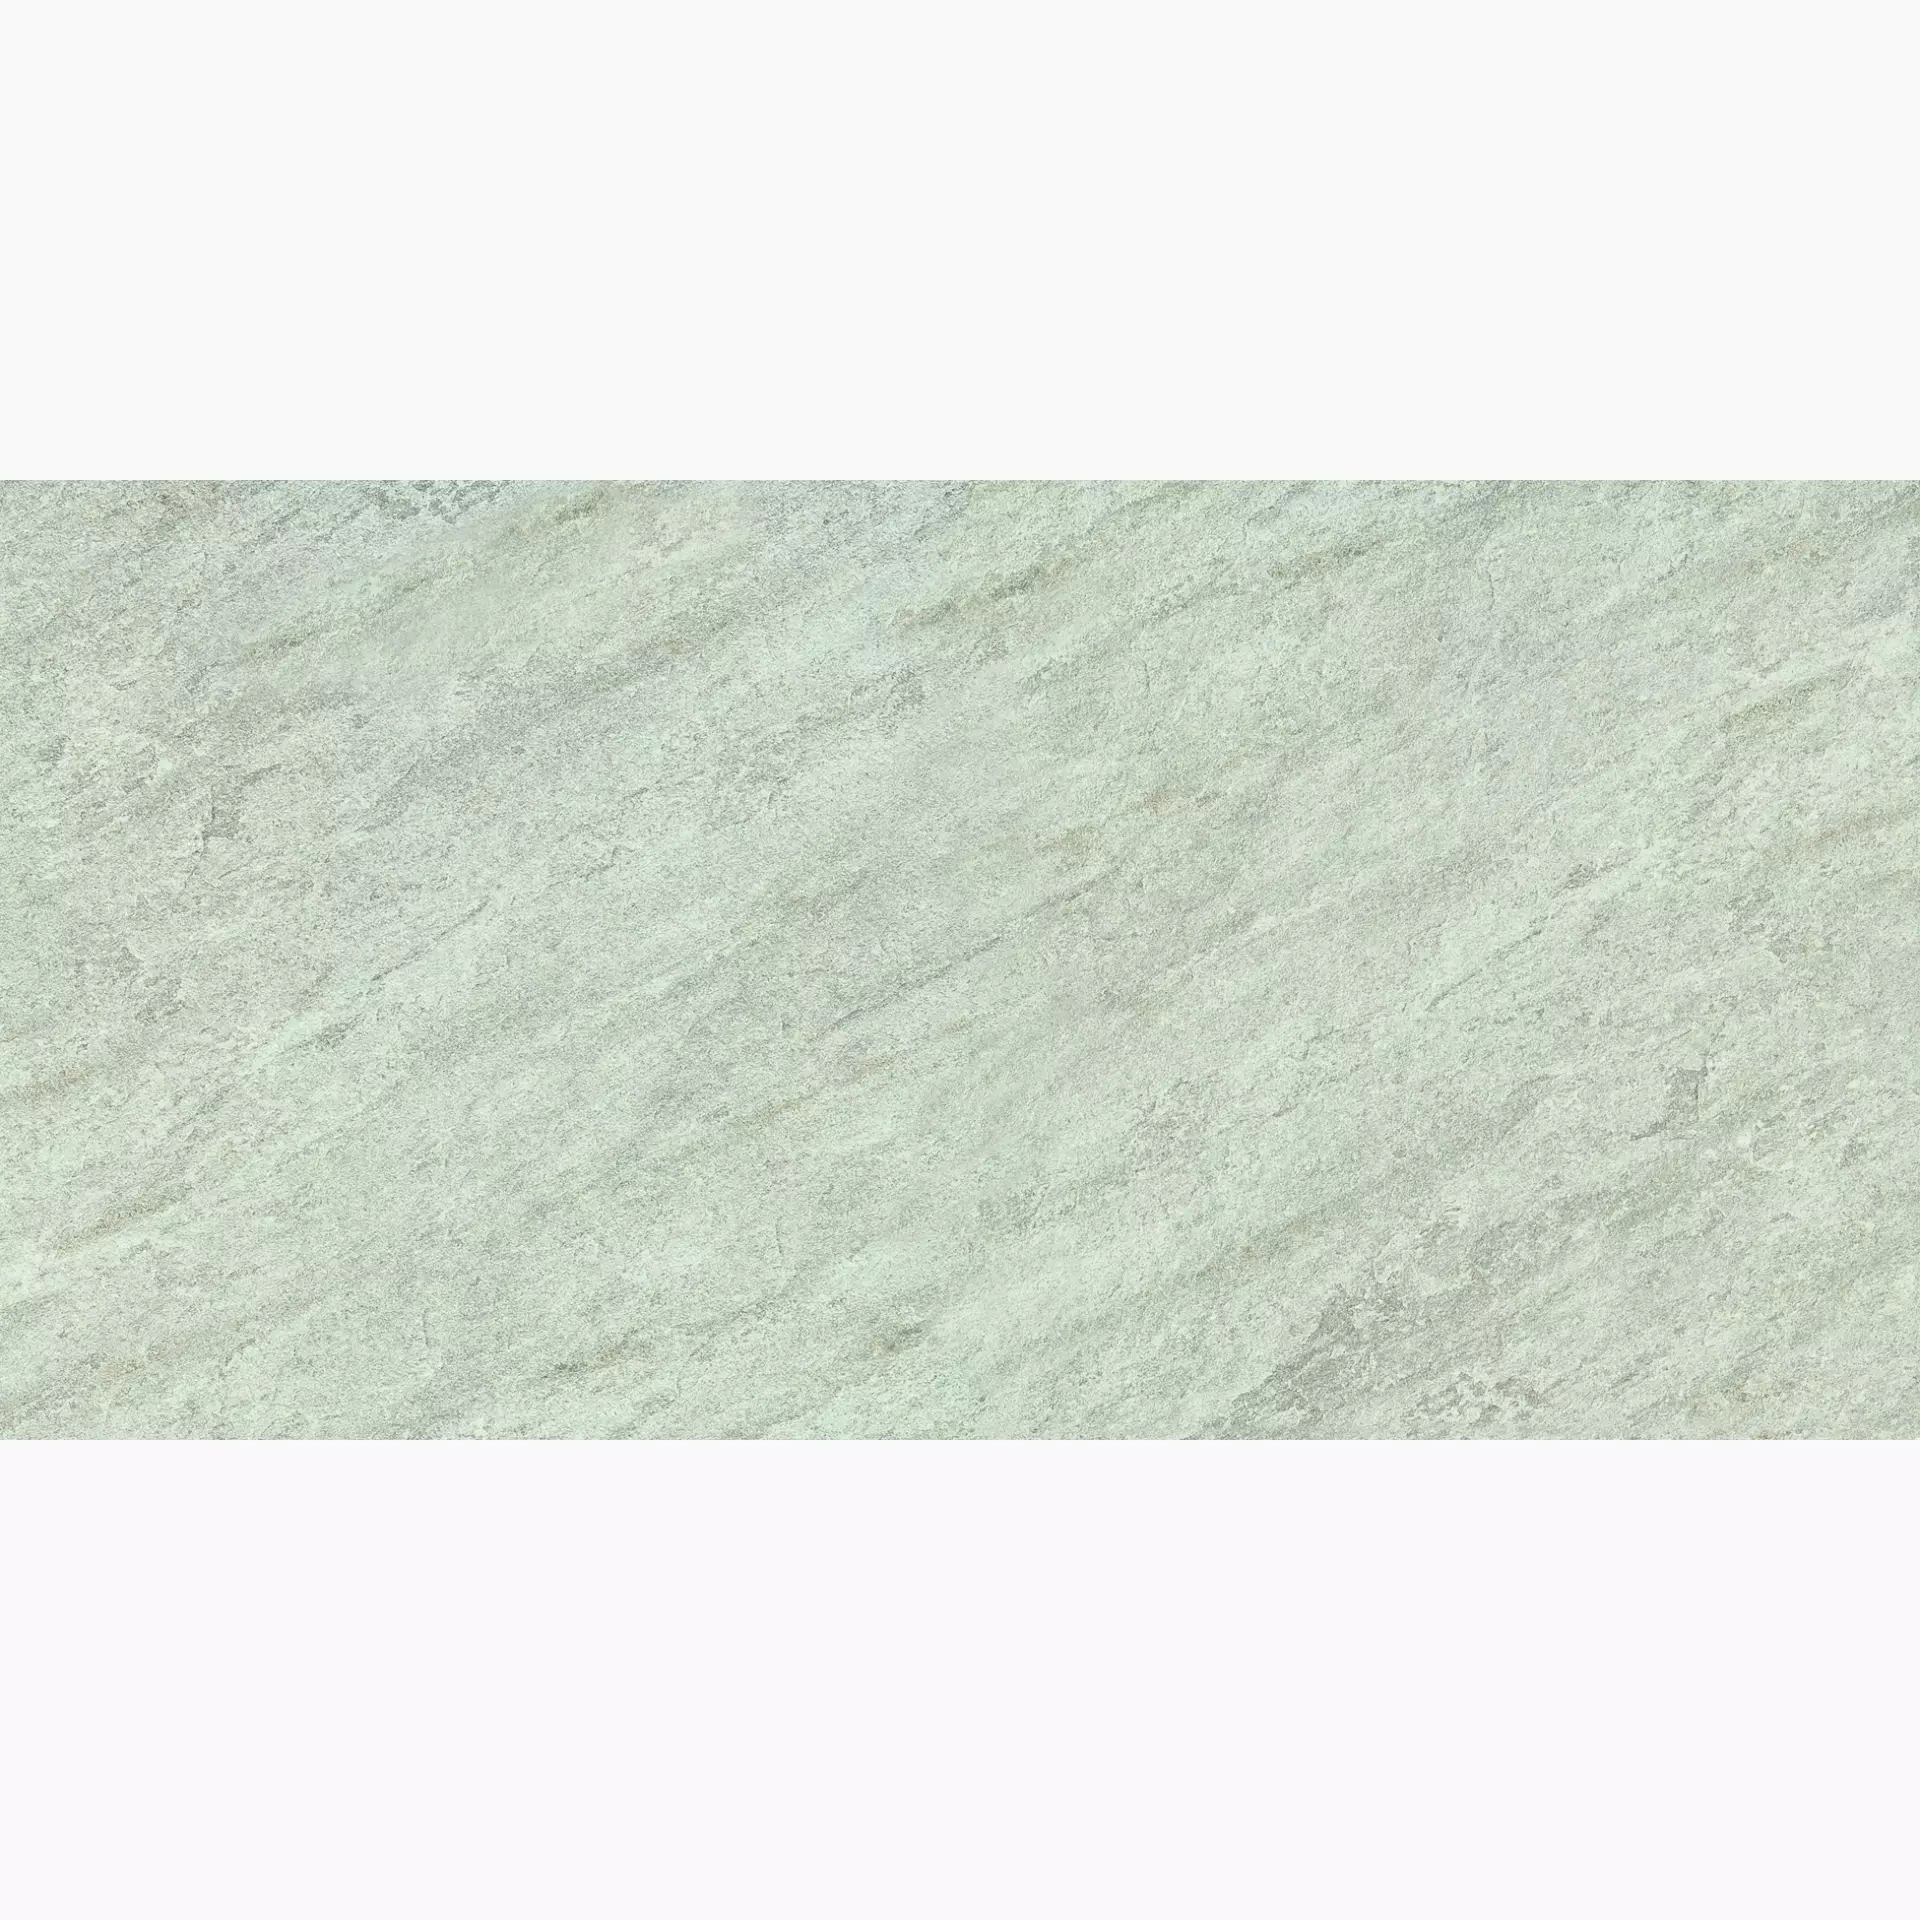 Ermes Aurelia Quartz Stone Grey Satinato PF00008532 30x60cm 10mm